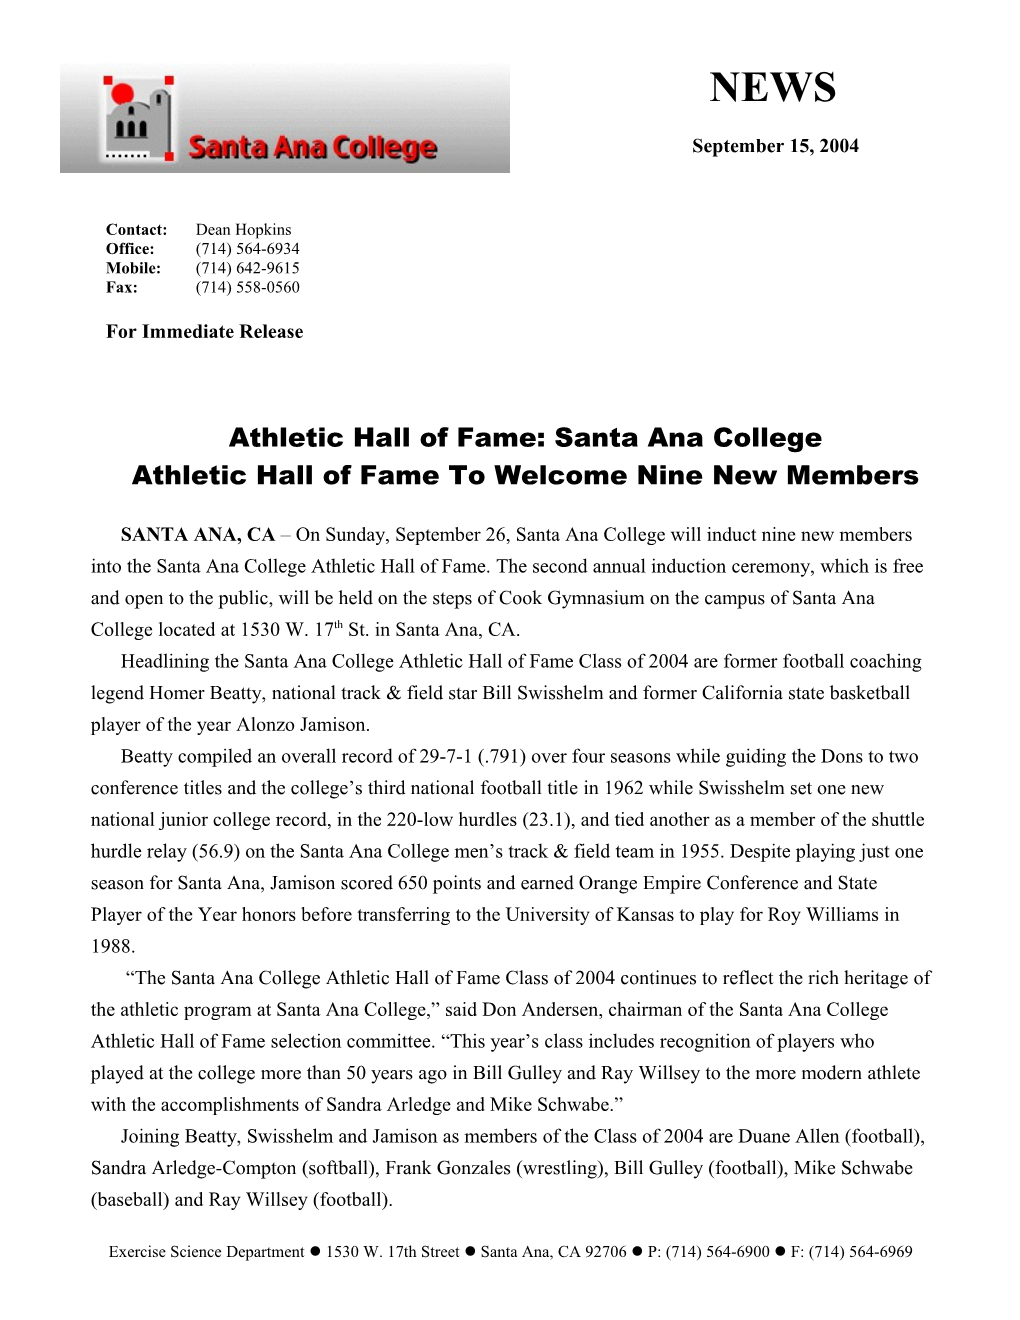 Athletic Hall of Fame: Santa Ana College